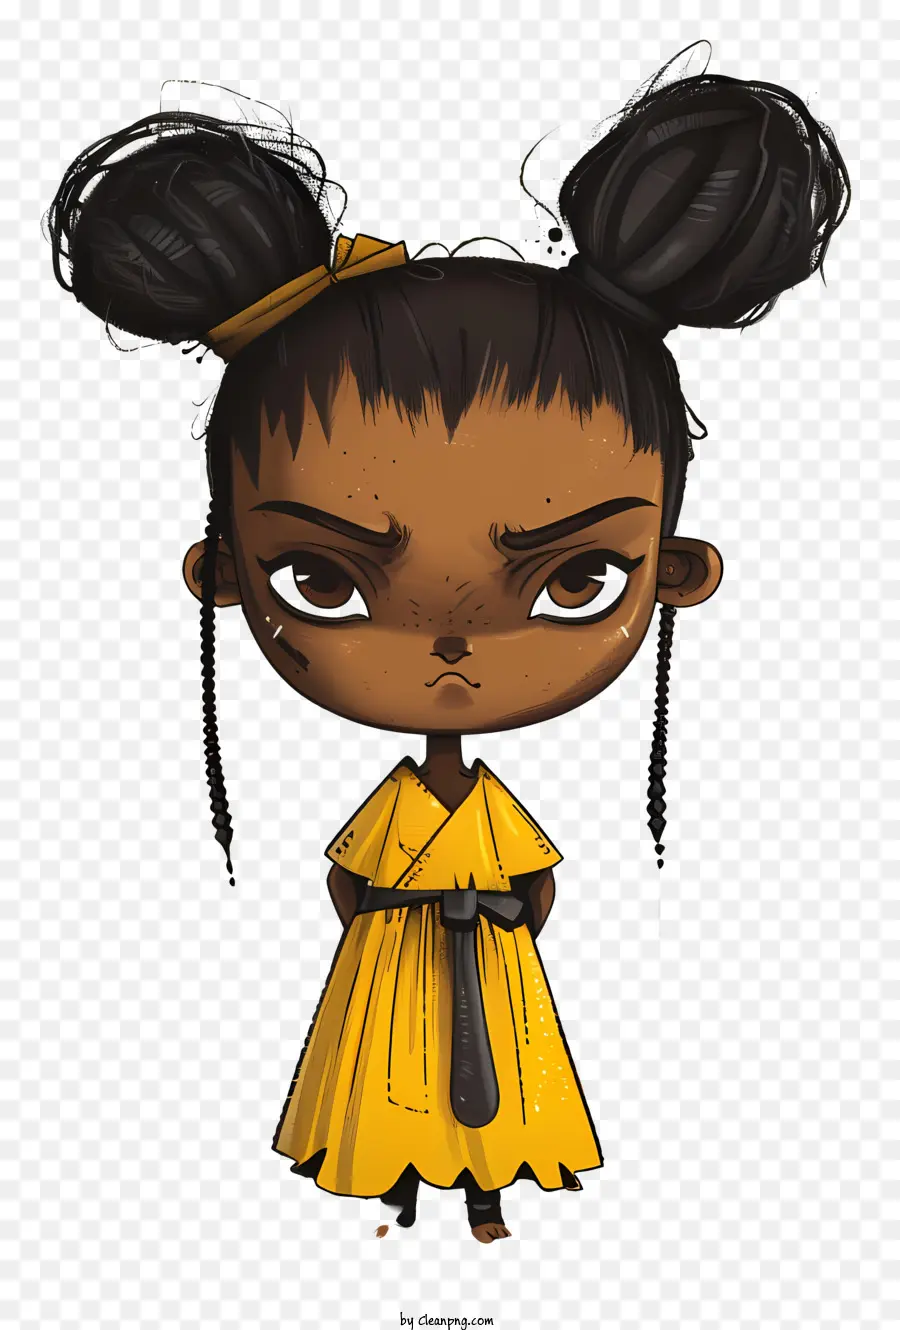 African Girl Manga Character Anime Girl Girl Black Hair - Ragazza manga determinata in abito giallo